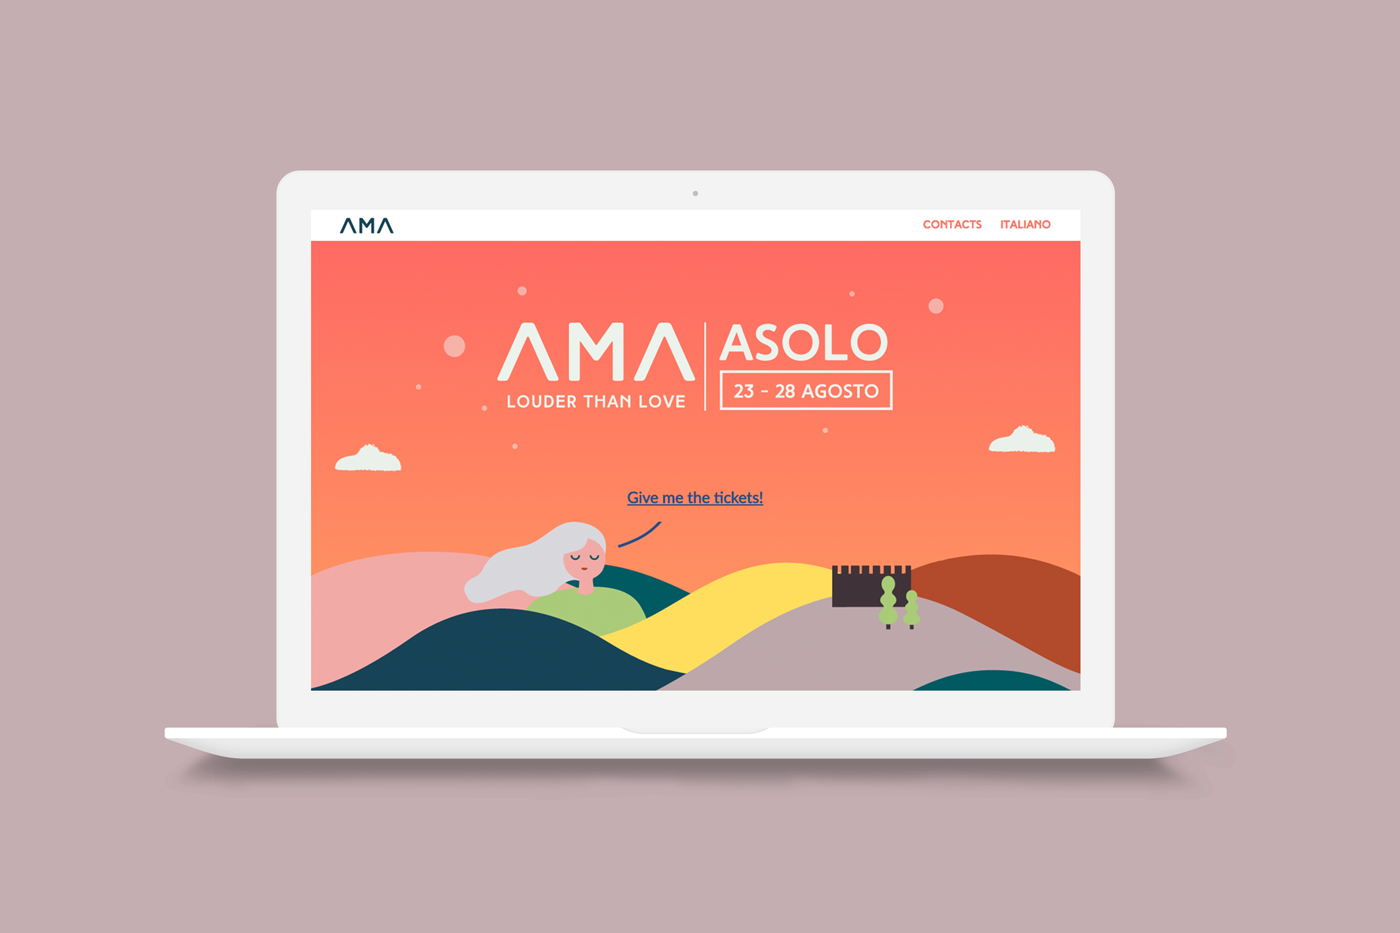 AMA musicfestival amamusicfestival ama2016 asolo Italy louderthanlove design charachter digital art